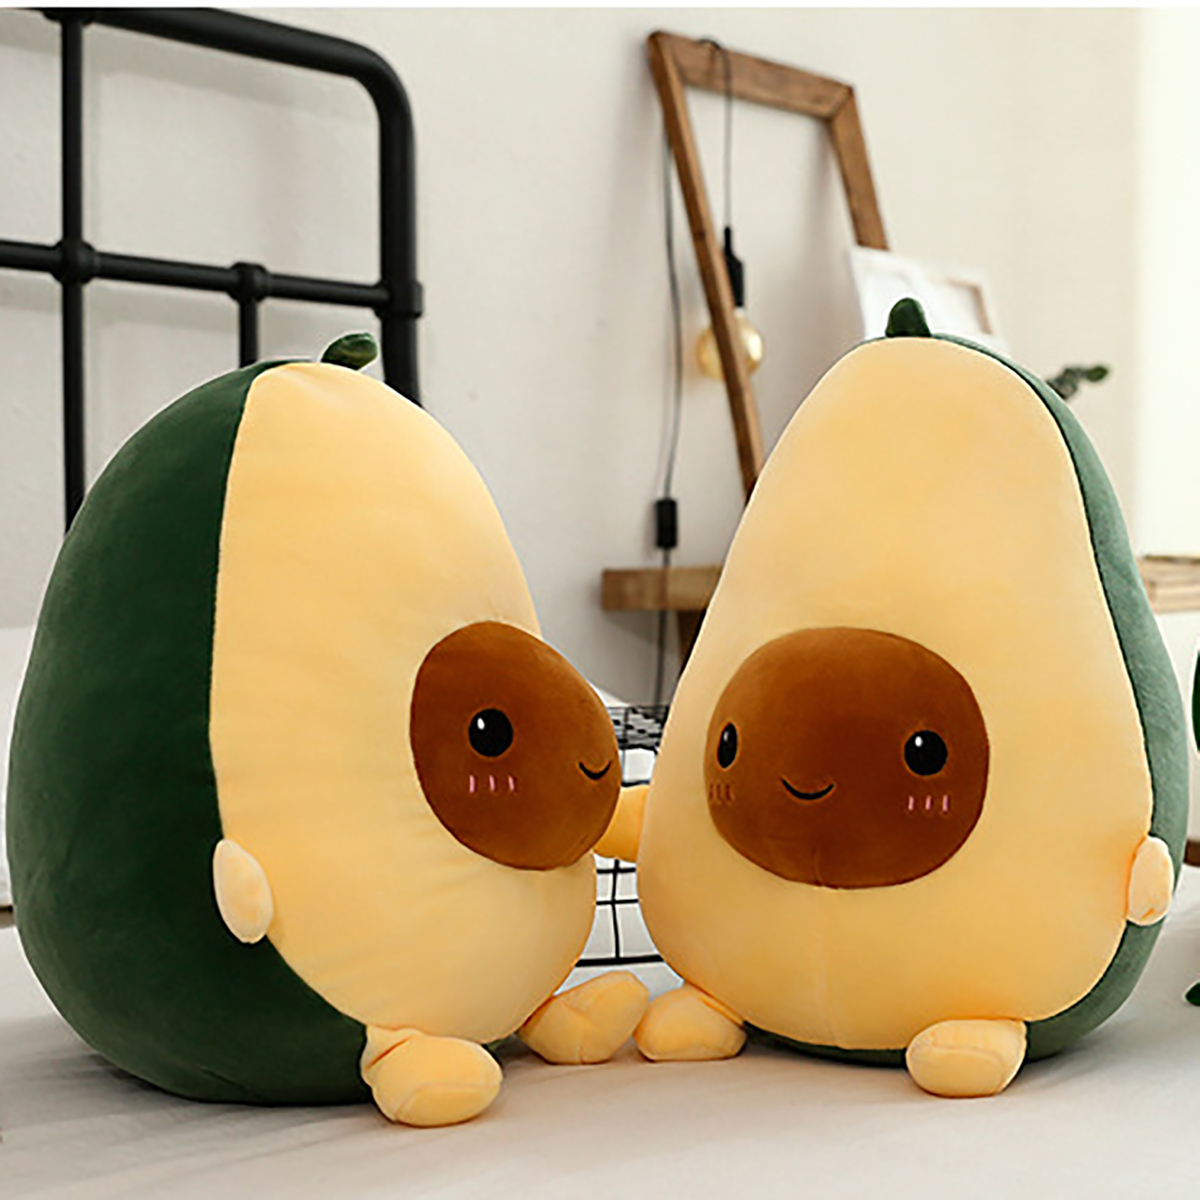 253560CM-Cute-Avocado-Stuffed-Plush-Toy-Soft-Baby-Doll-Cartoon-Fruit-Pillow-Sofa-Cushion-for-Kids-Bi-1627709-5